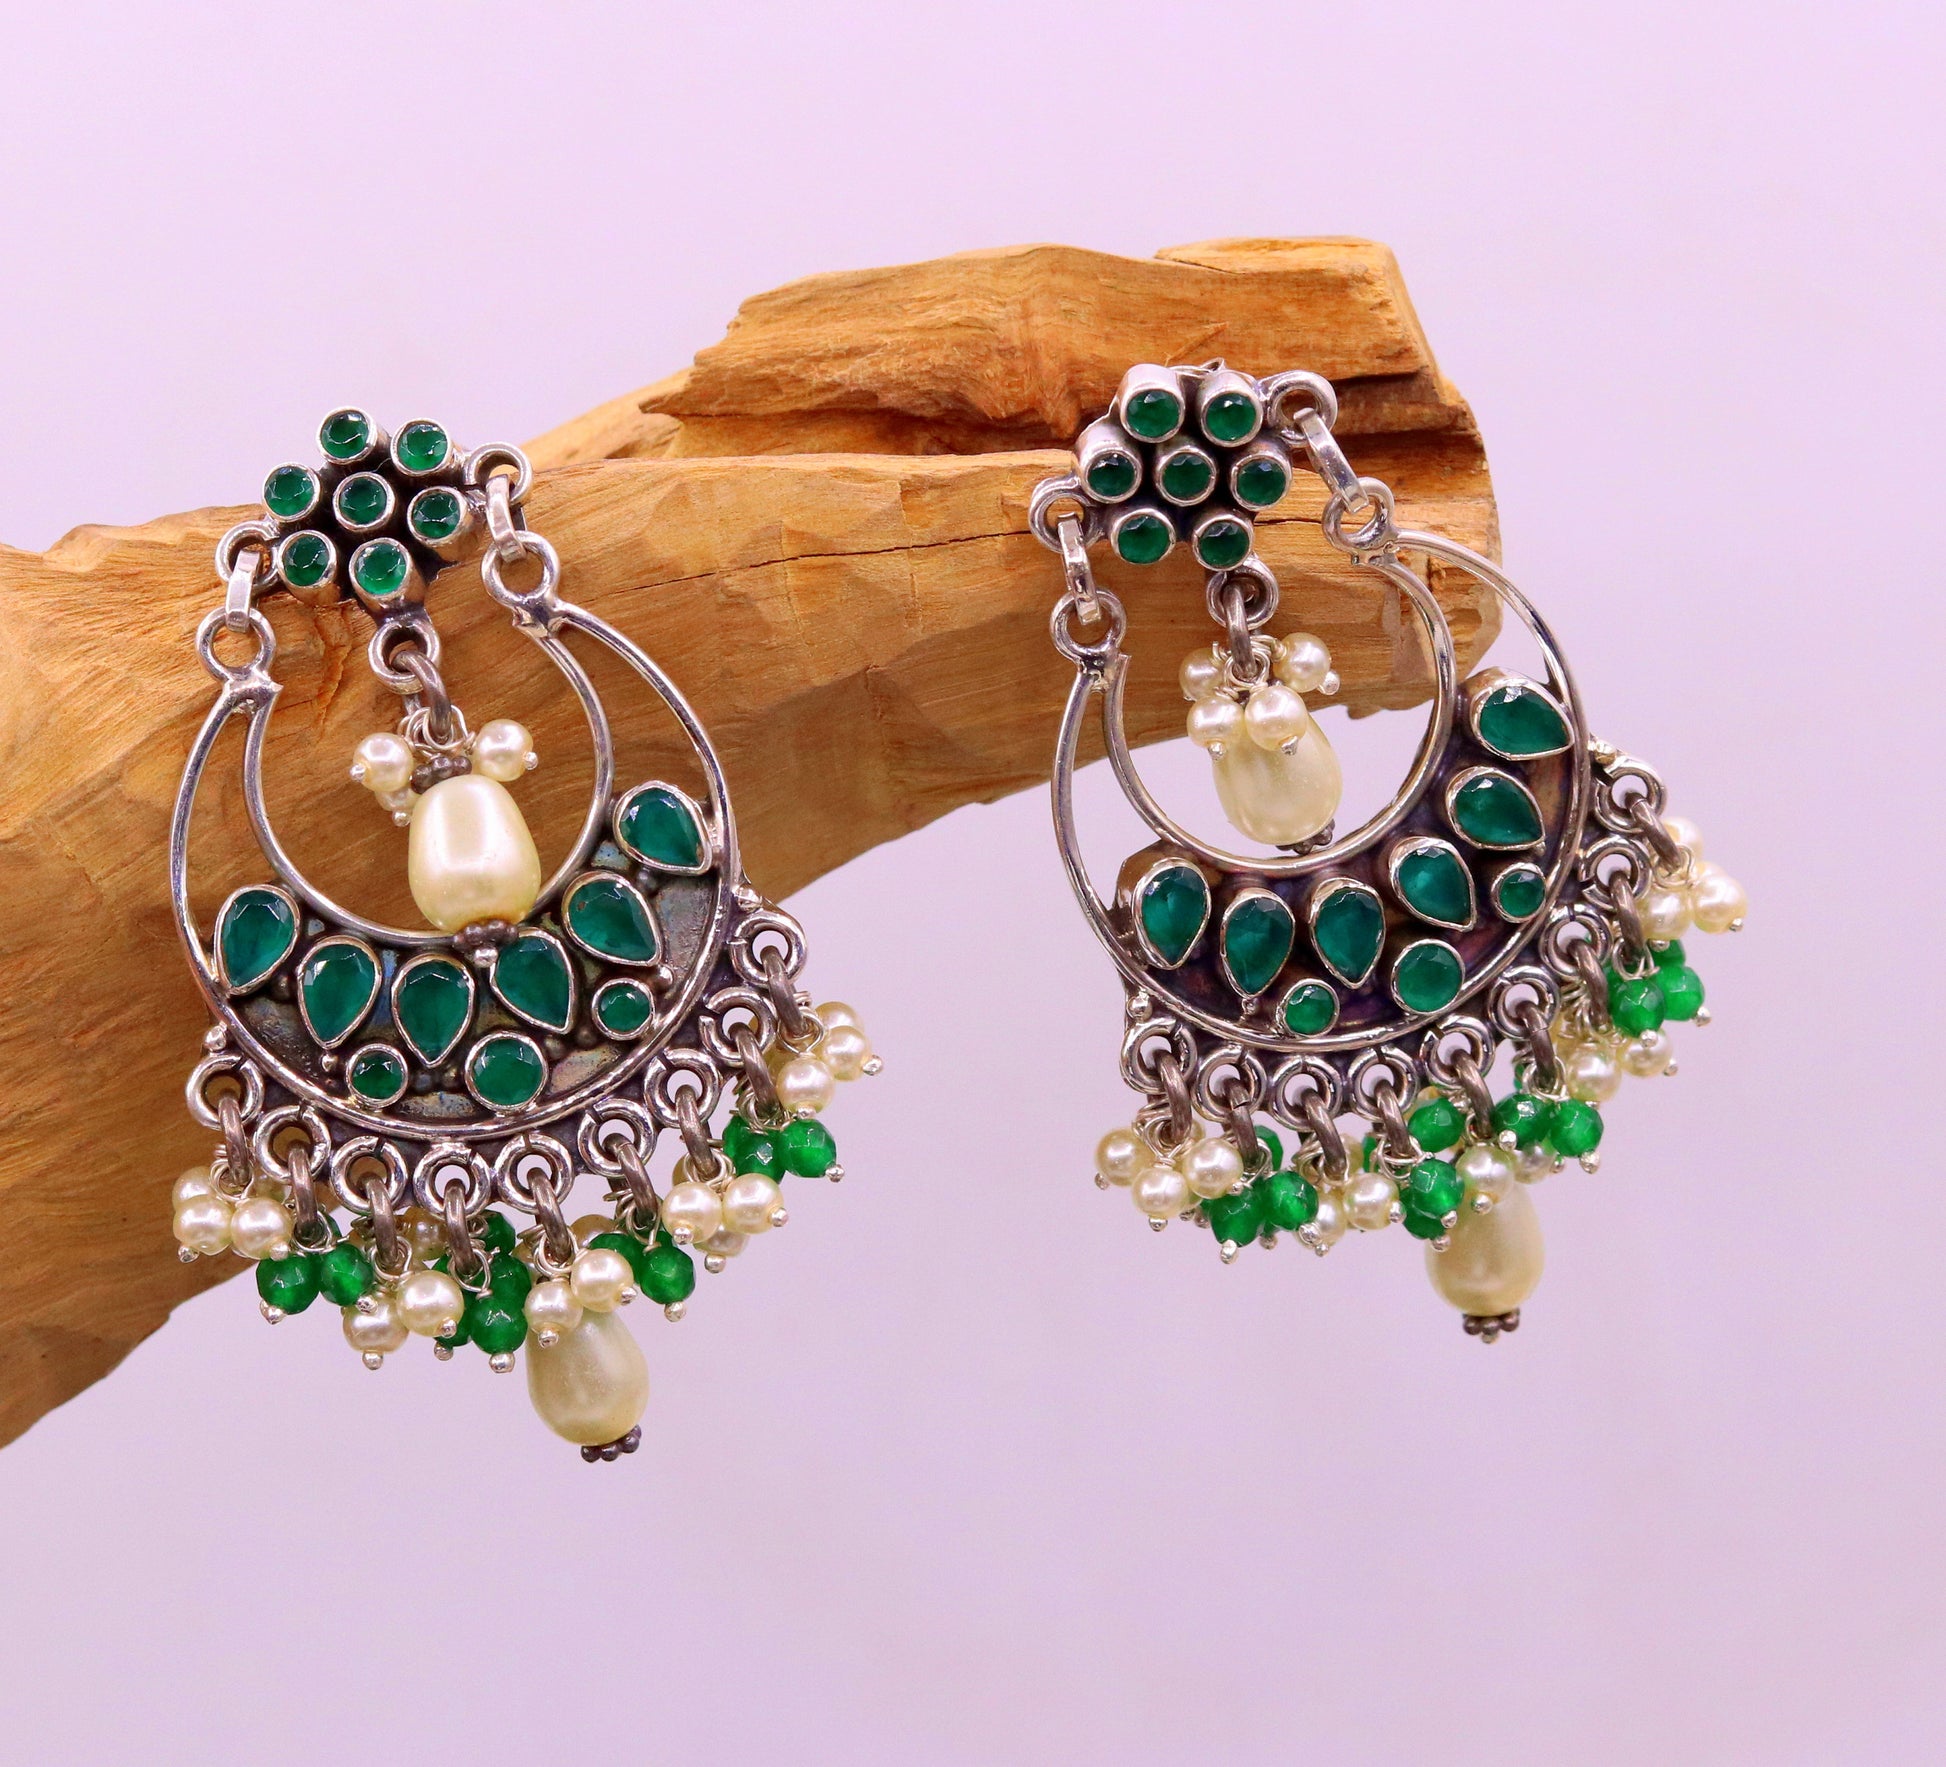 925 sterling silver handmade Green Onyx stone stud earring drop dangling, best design charm earrings hanging tiny pearl tribal jewelry s714 - TRIBAL ORNAMENTS